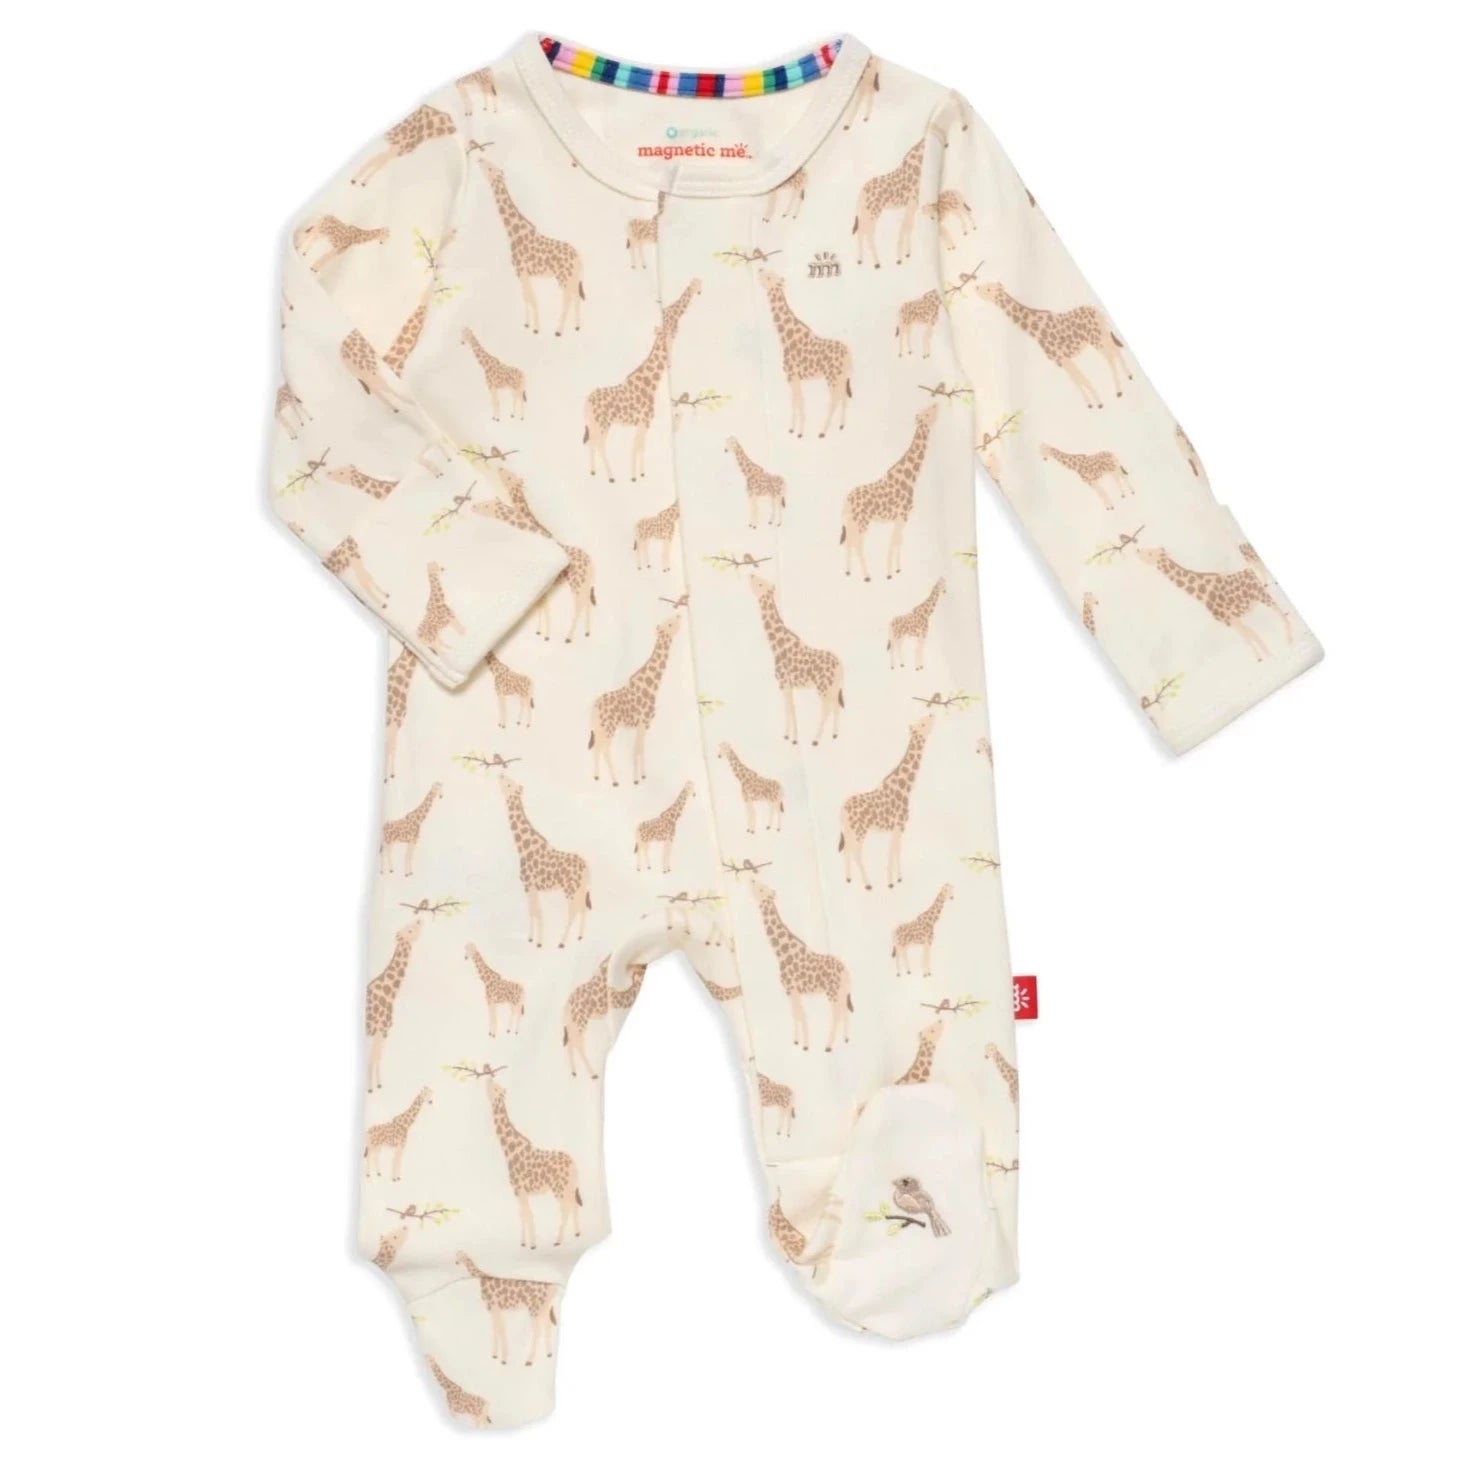 Cream long sleeve baby onesie with giraffes on it